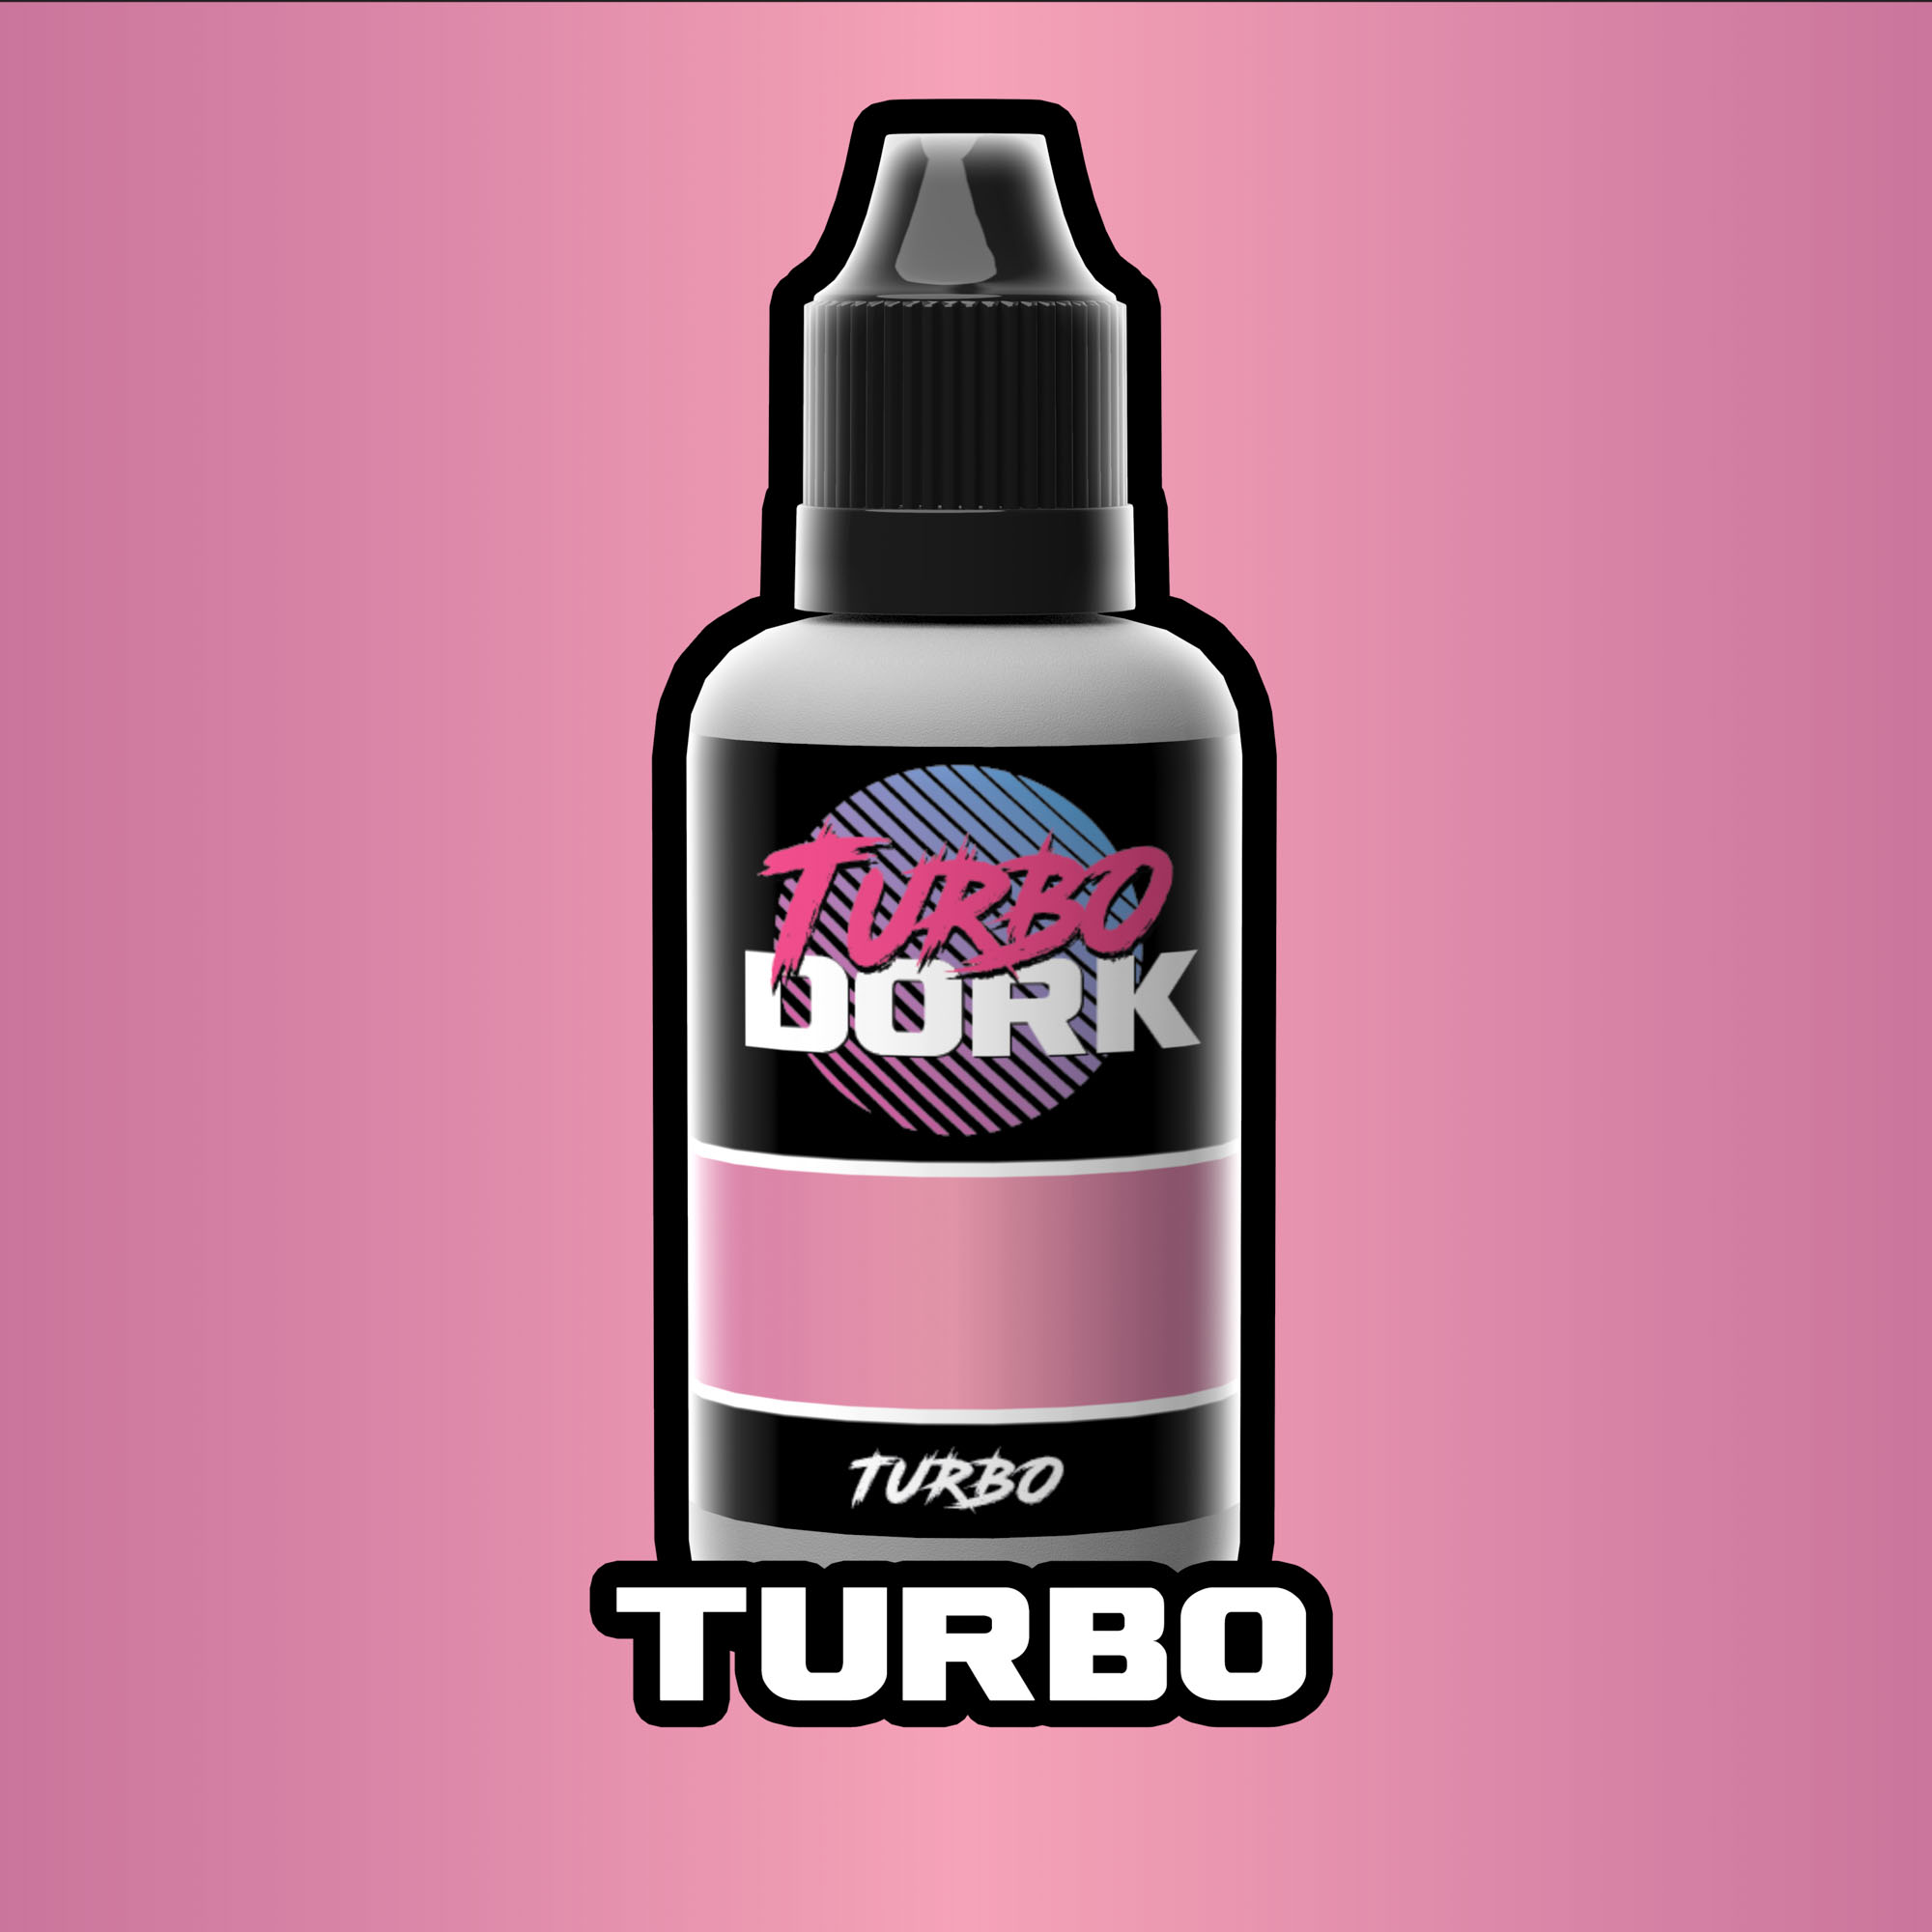 Turbo Dork: Turbo (Metallic) 